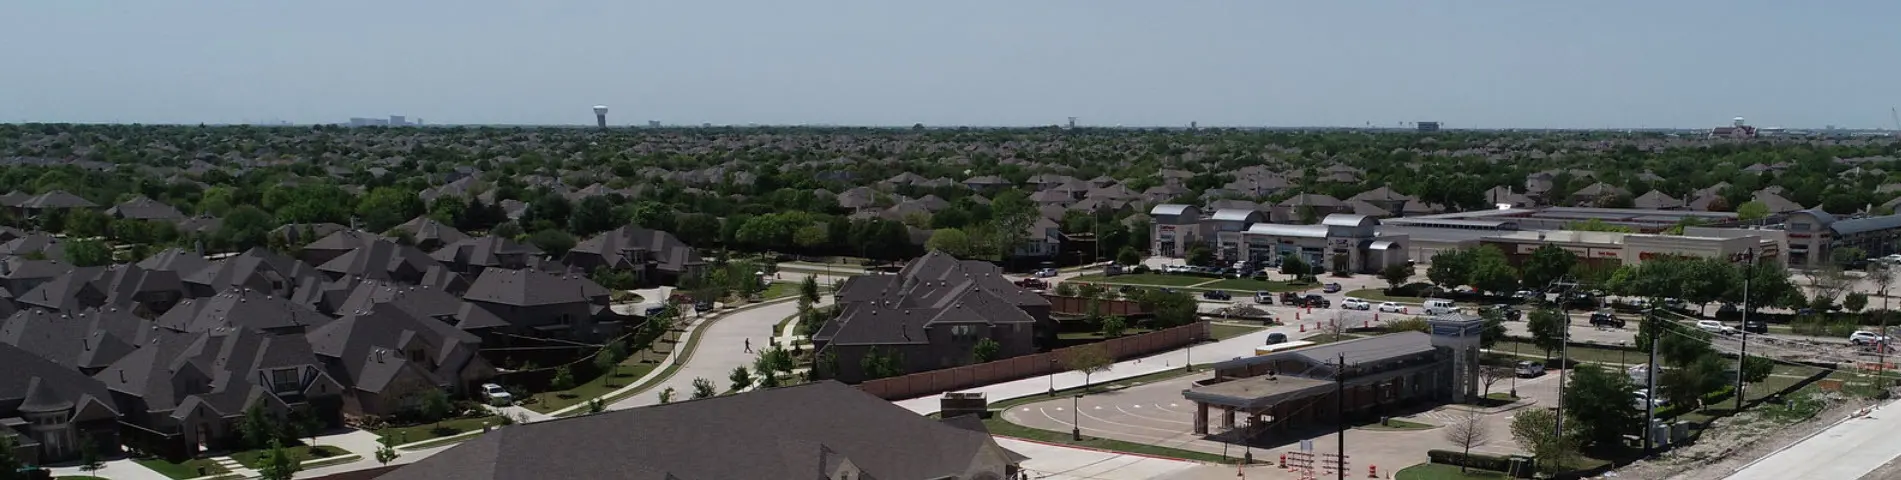 Collin County, TX Real Estate, Homes & Condos For Sale